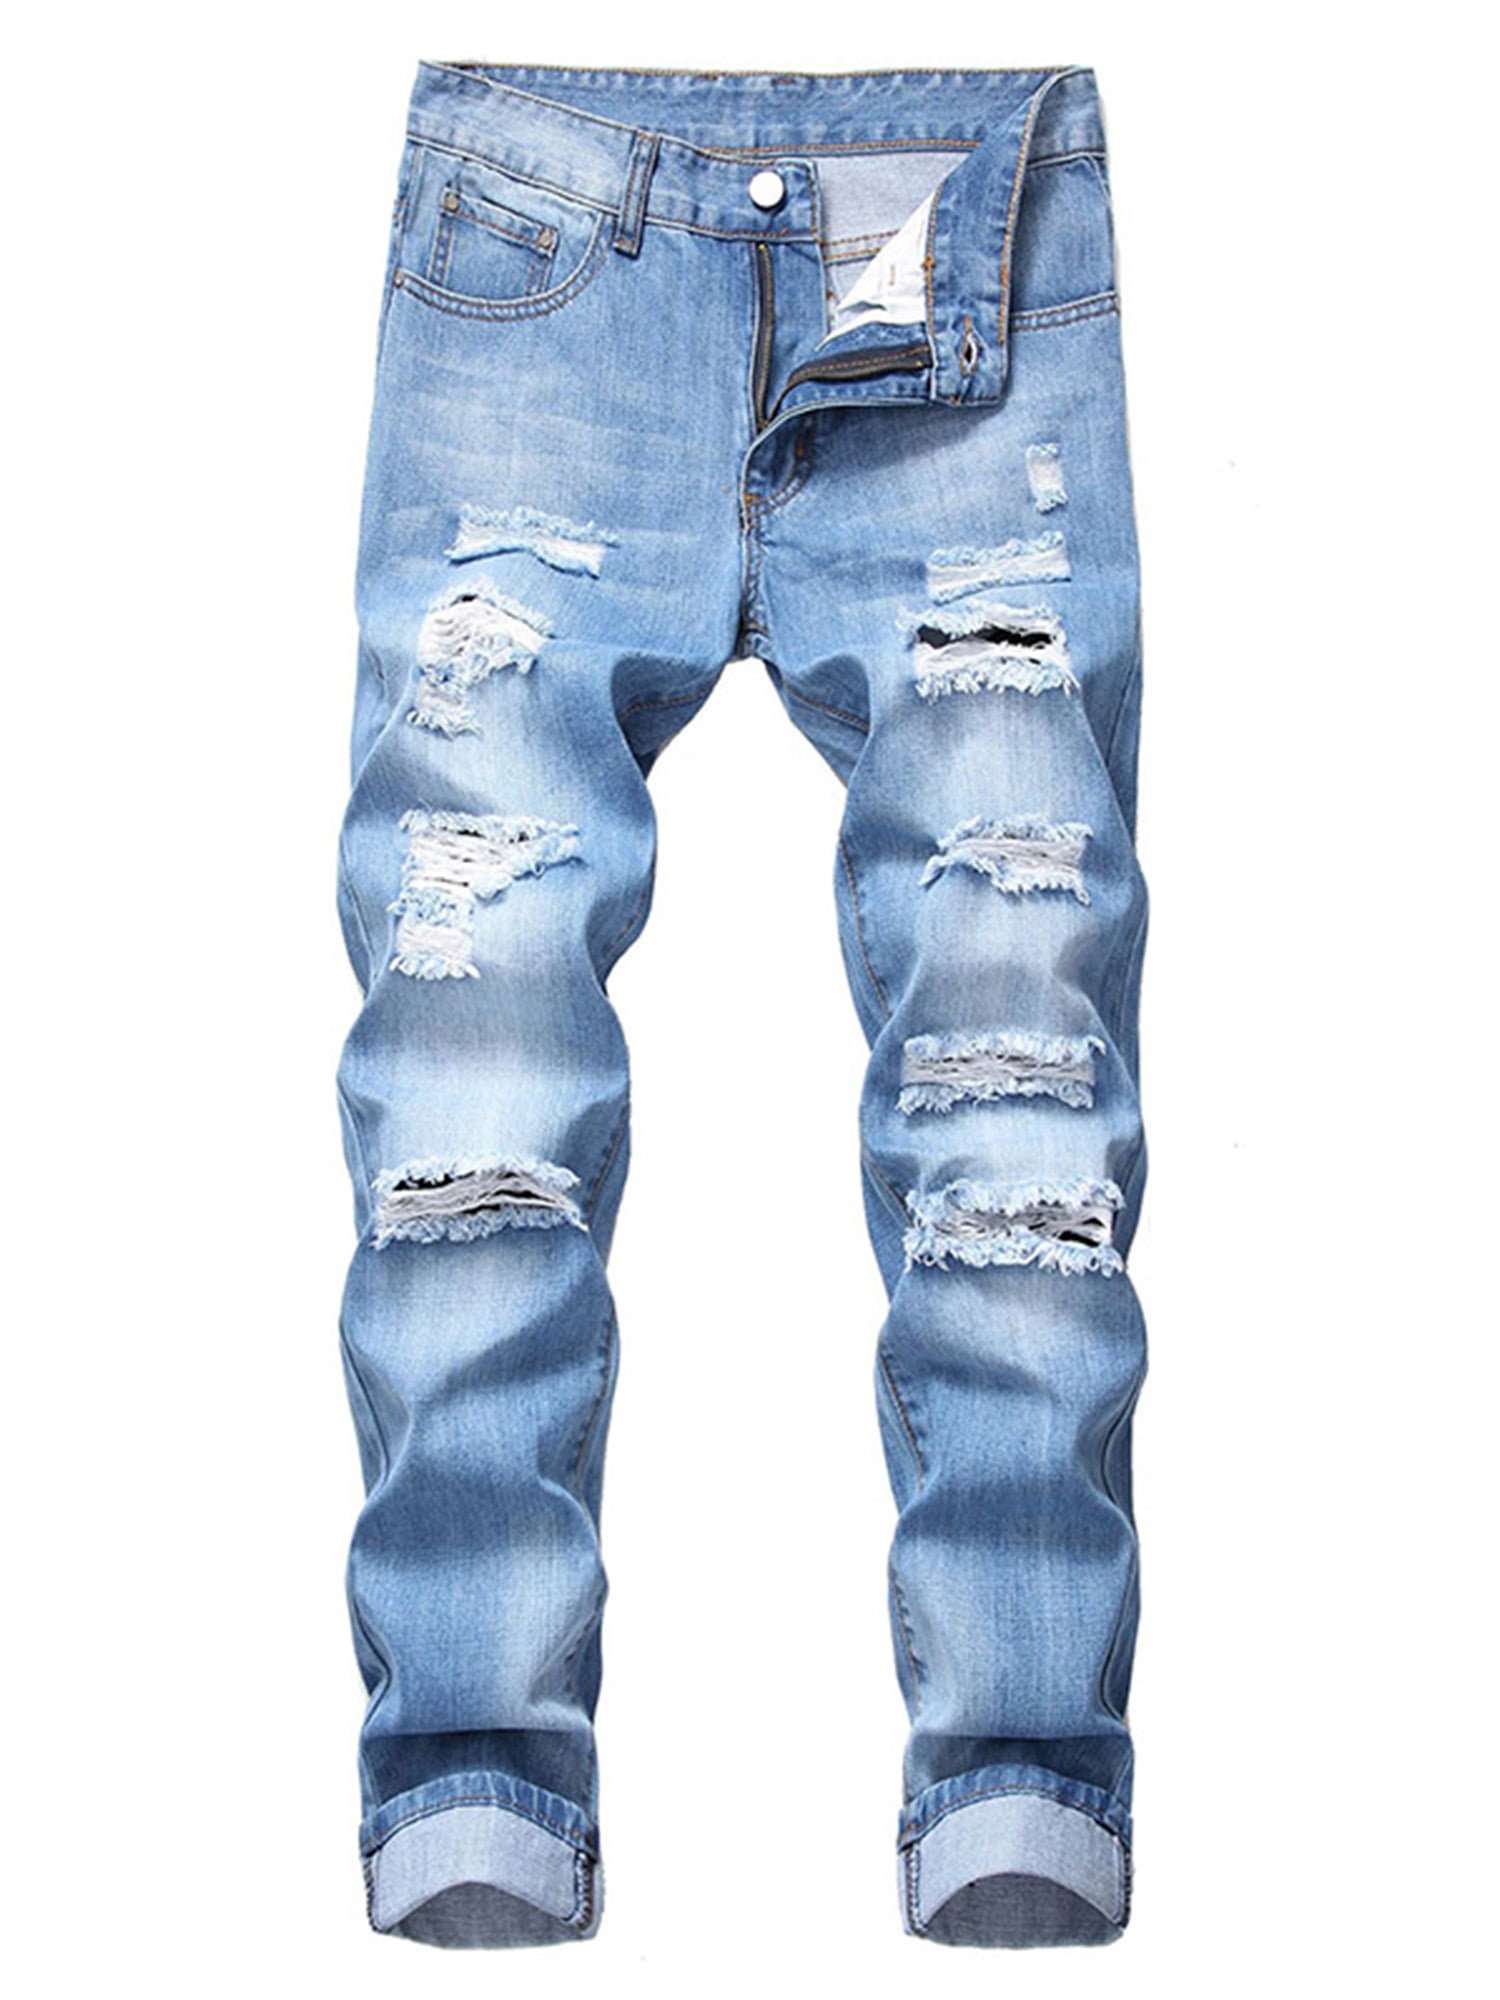 Frontwalk Men's Vintage Jeans Ripped Hole Straight Leg Trouser